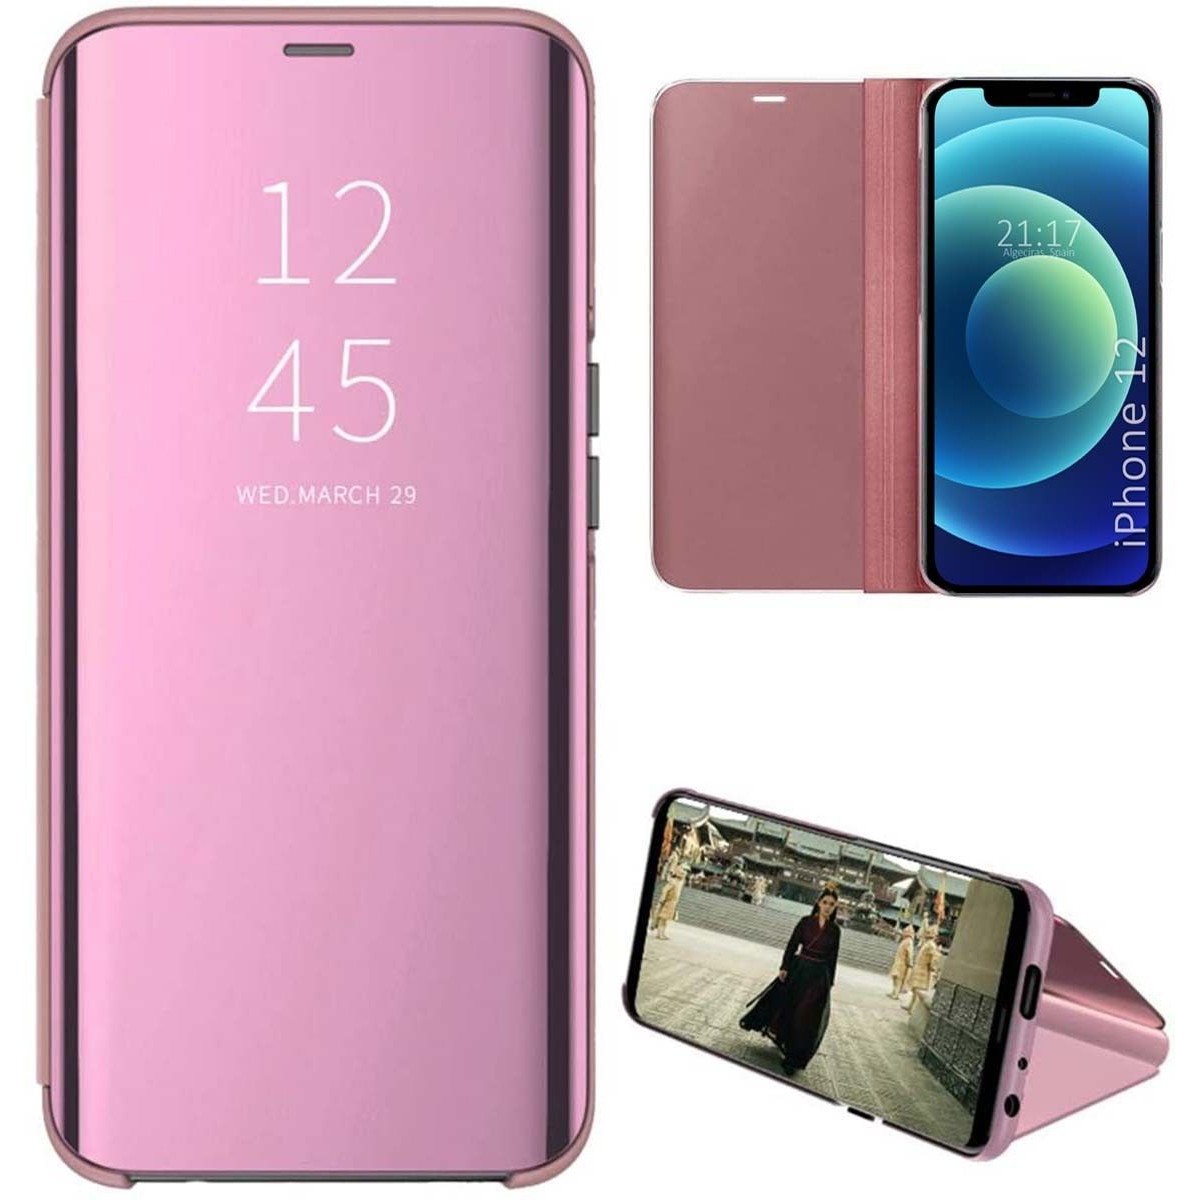 Funda Flip Cover Clear View para Iphone 12 Mini (5.4) color Rosa